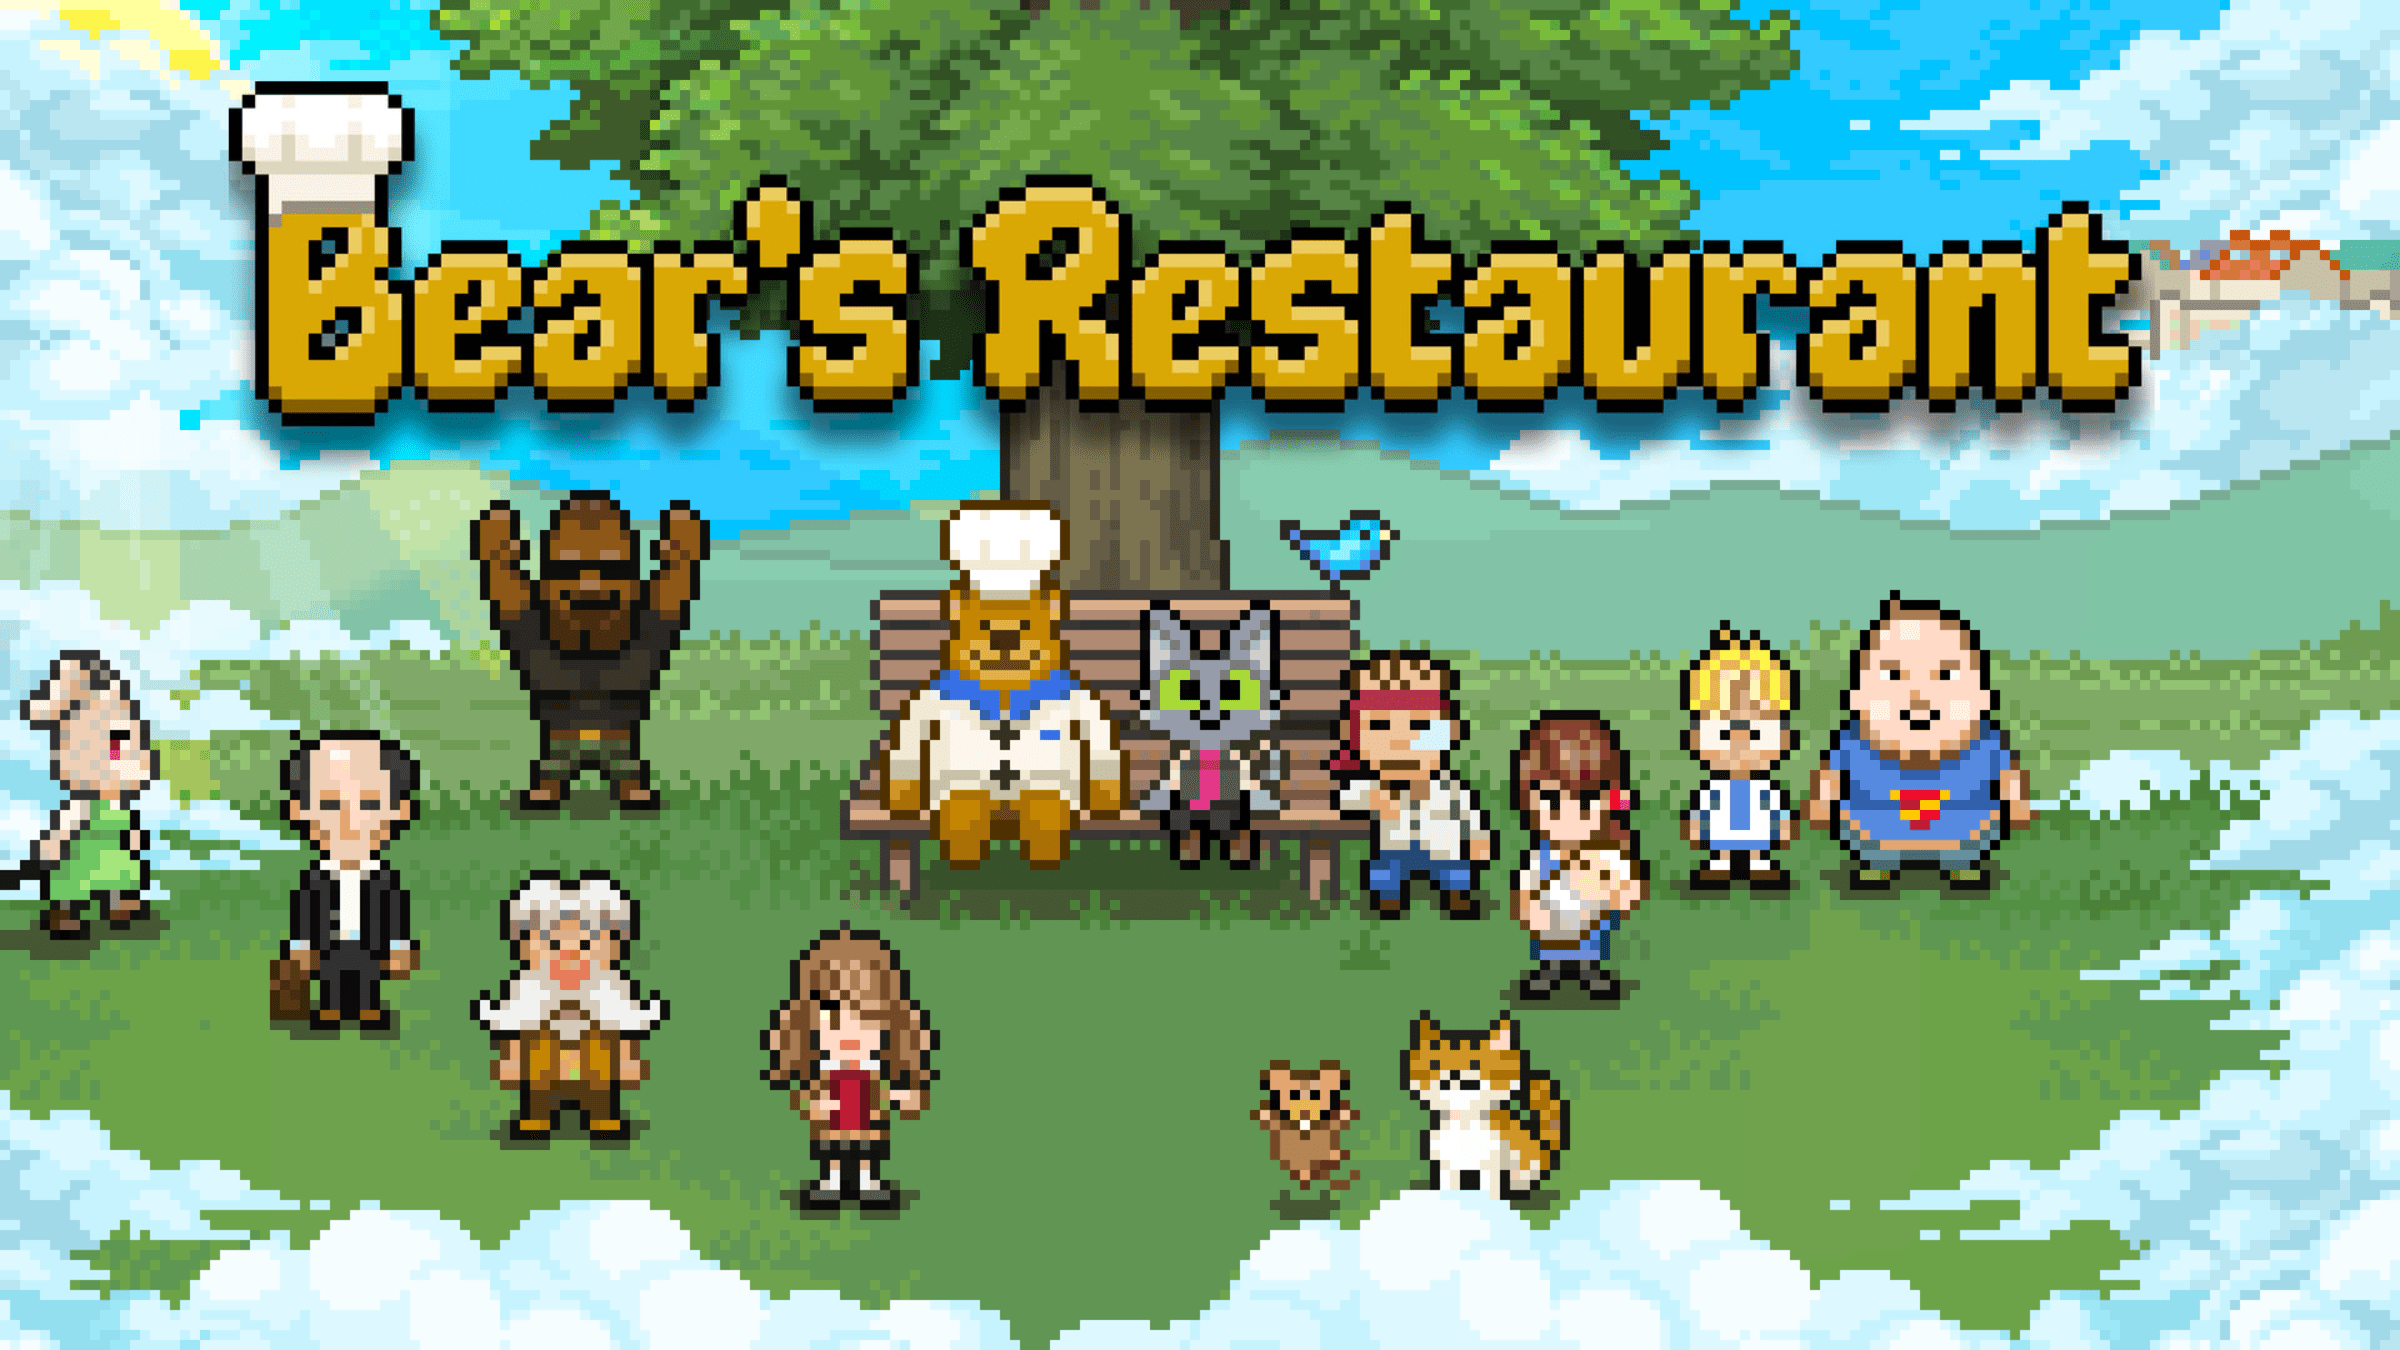 Bear's Restaurant for Nintendo Switch - Nintendo Official Site